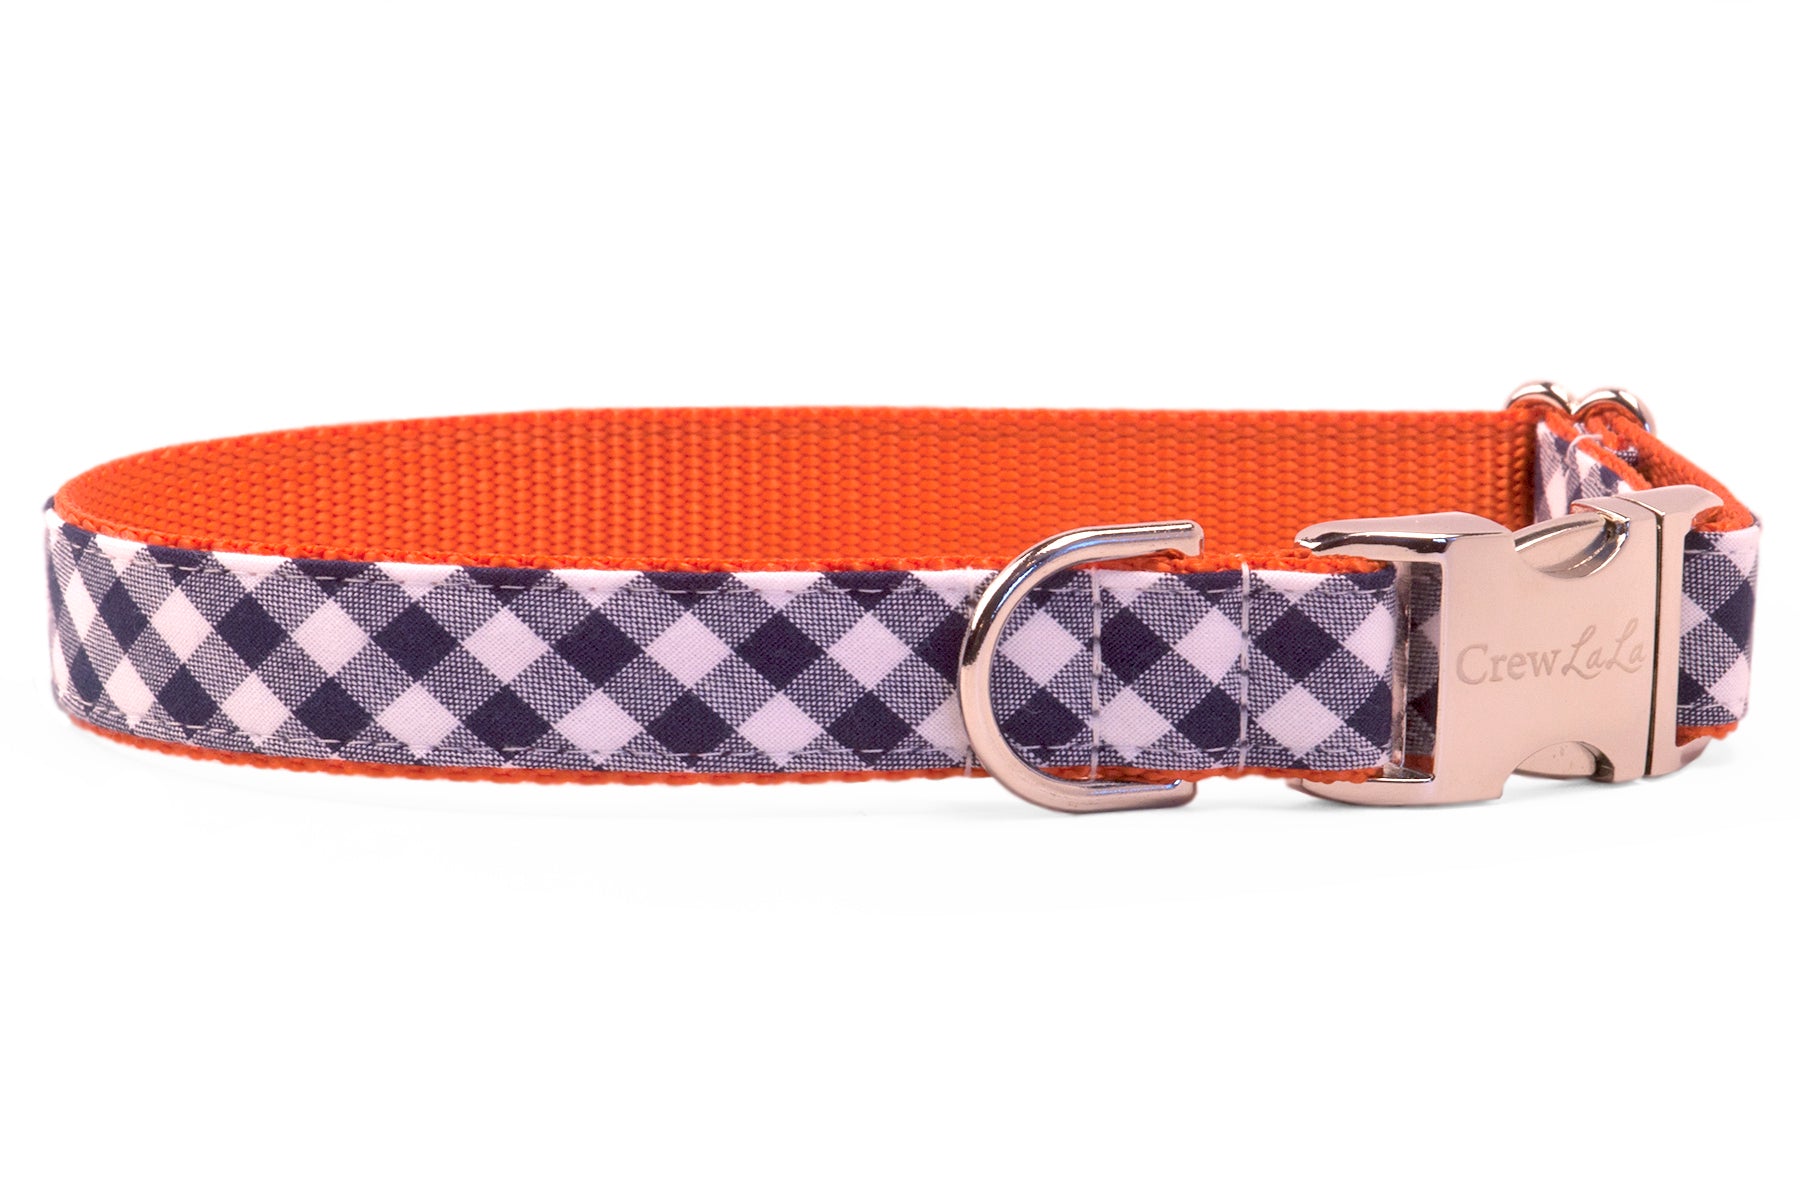 Auburn Burnt Orange on Navy Check Bow Tie Dog Collar - Crew LaLa